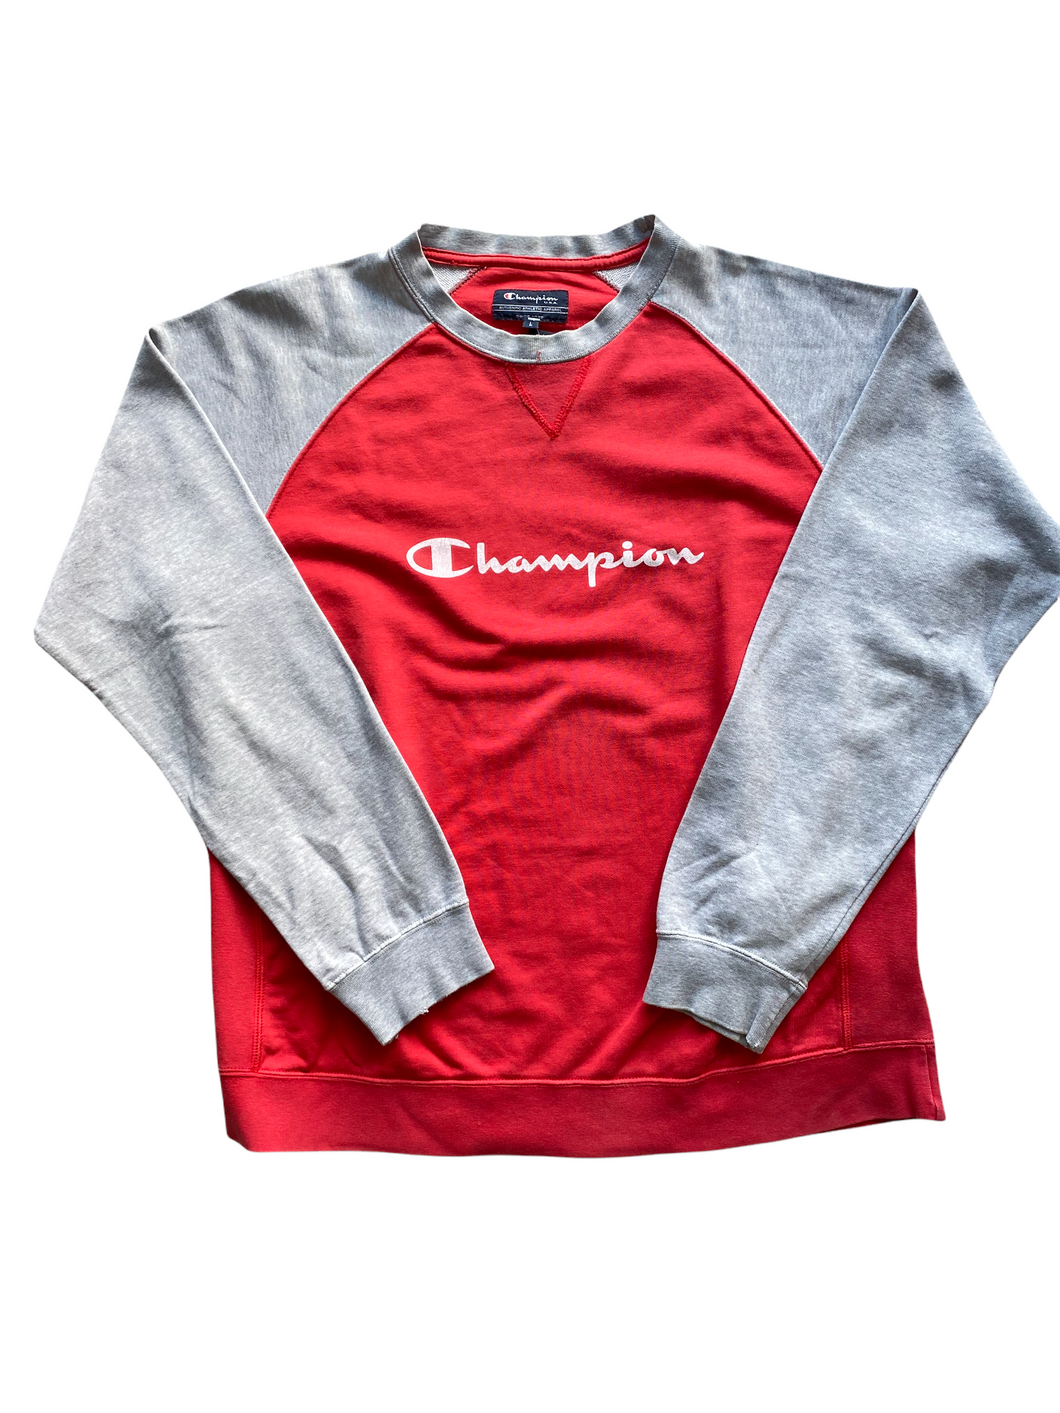 Vintage Champion Sweater